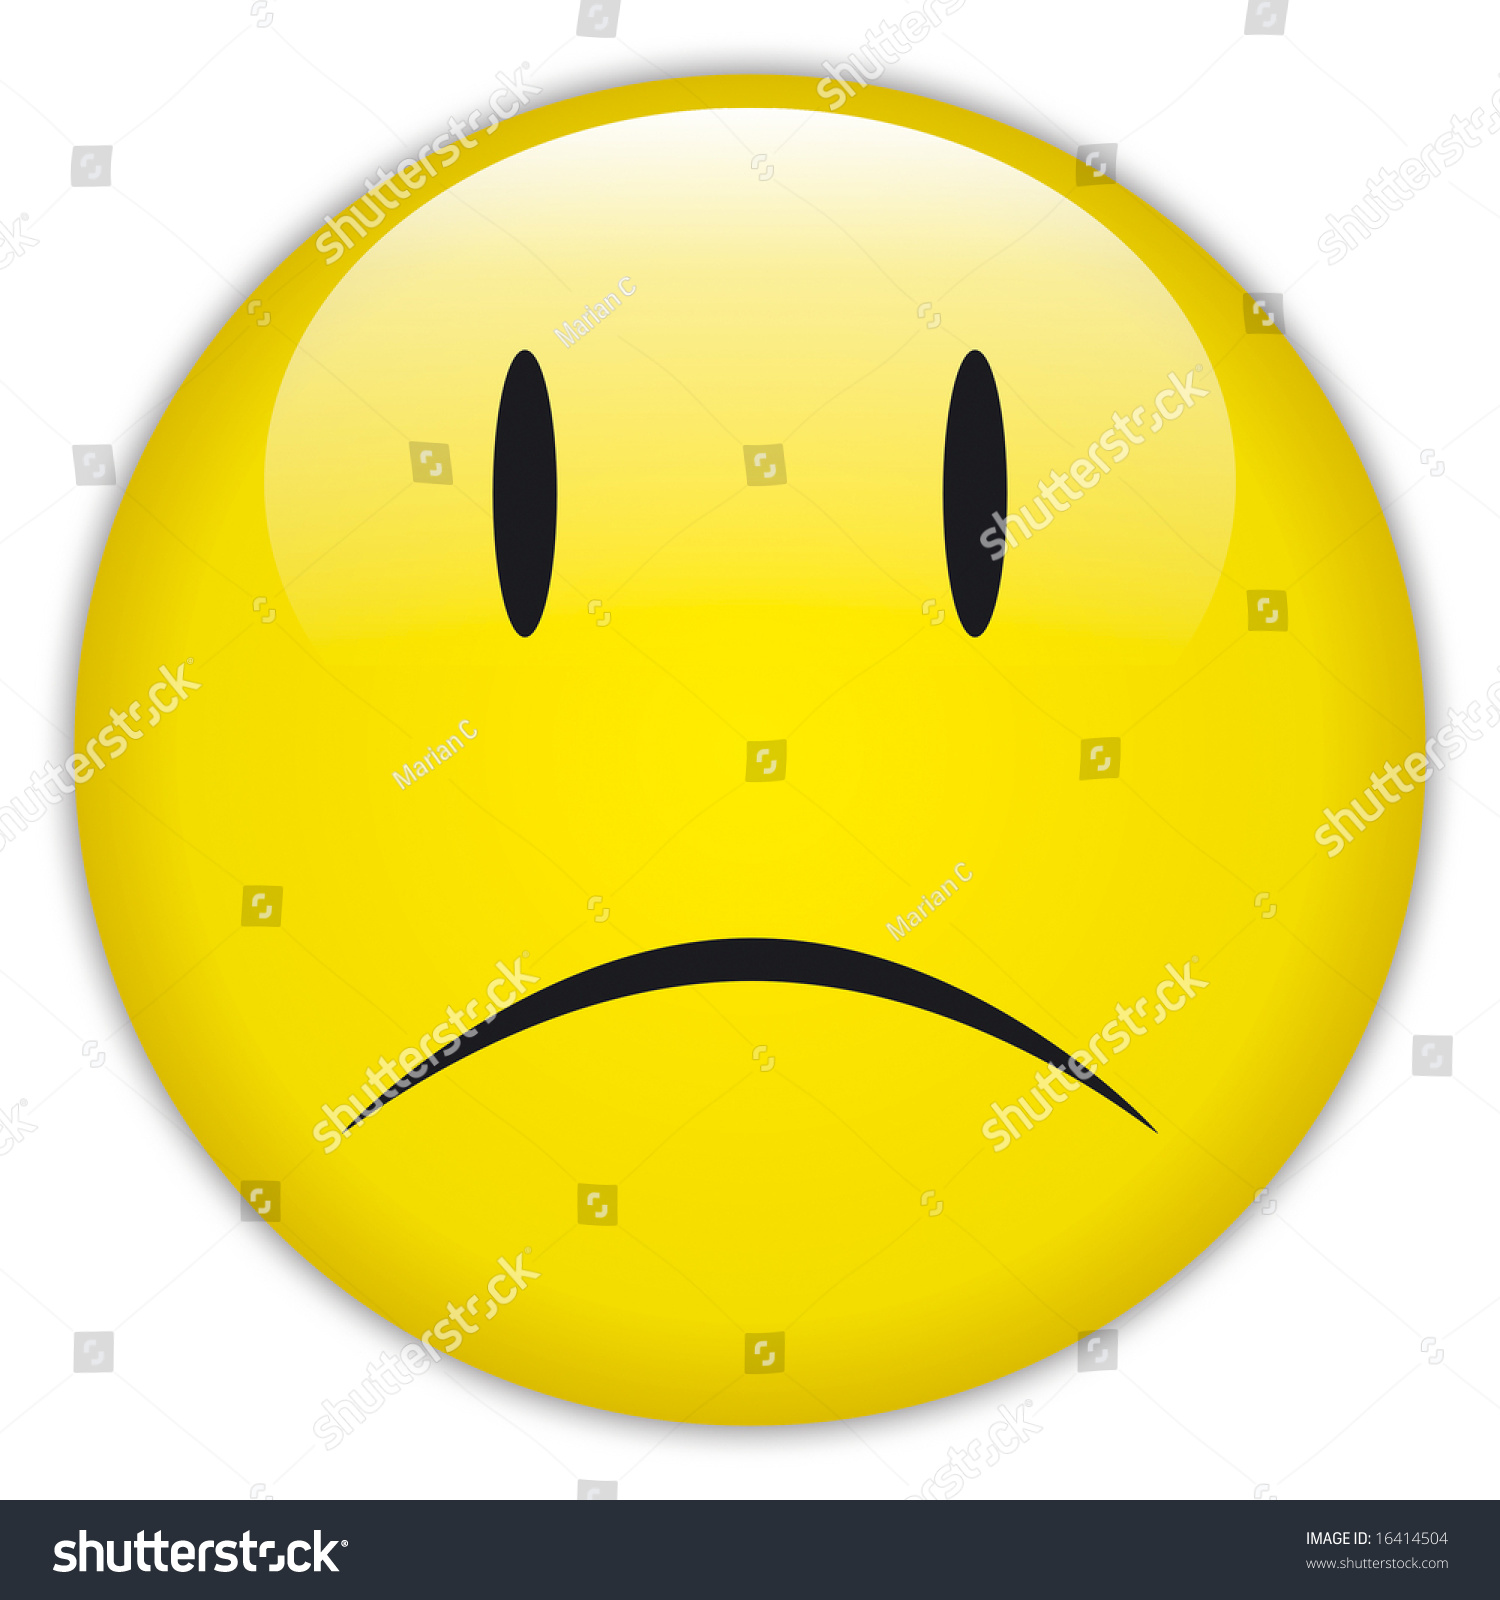 Sad Face Design Stock Photo 16414504 : Shutterstock